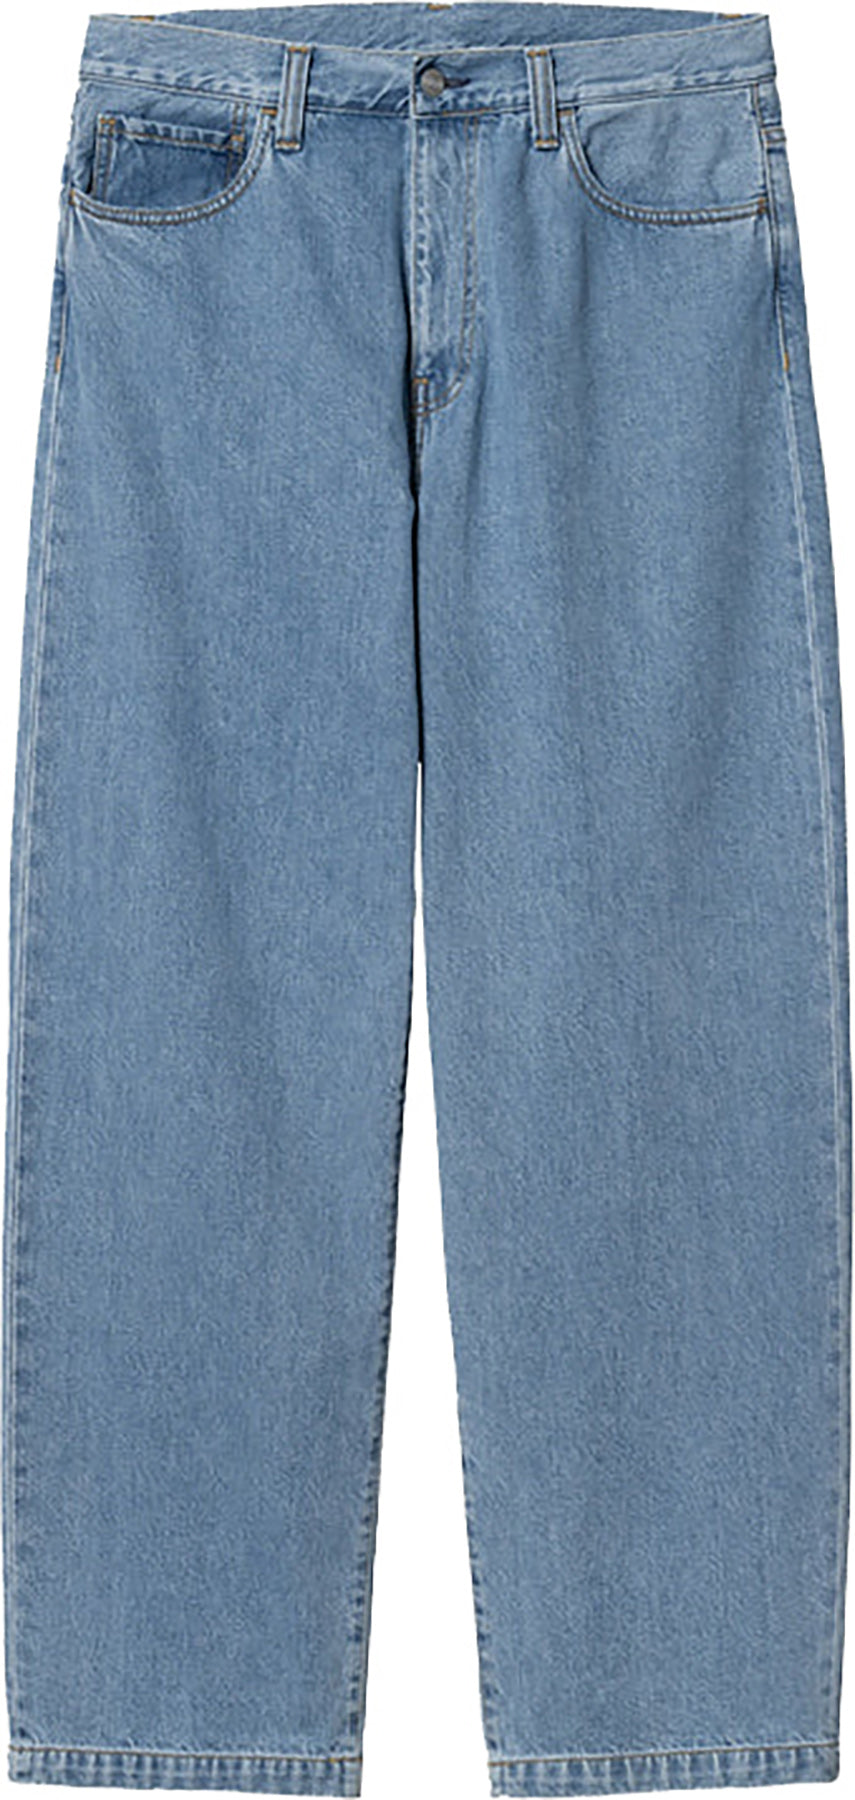 Blue Landon straight-leg jeans, Carhartt WIP